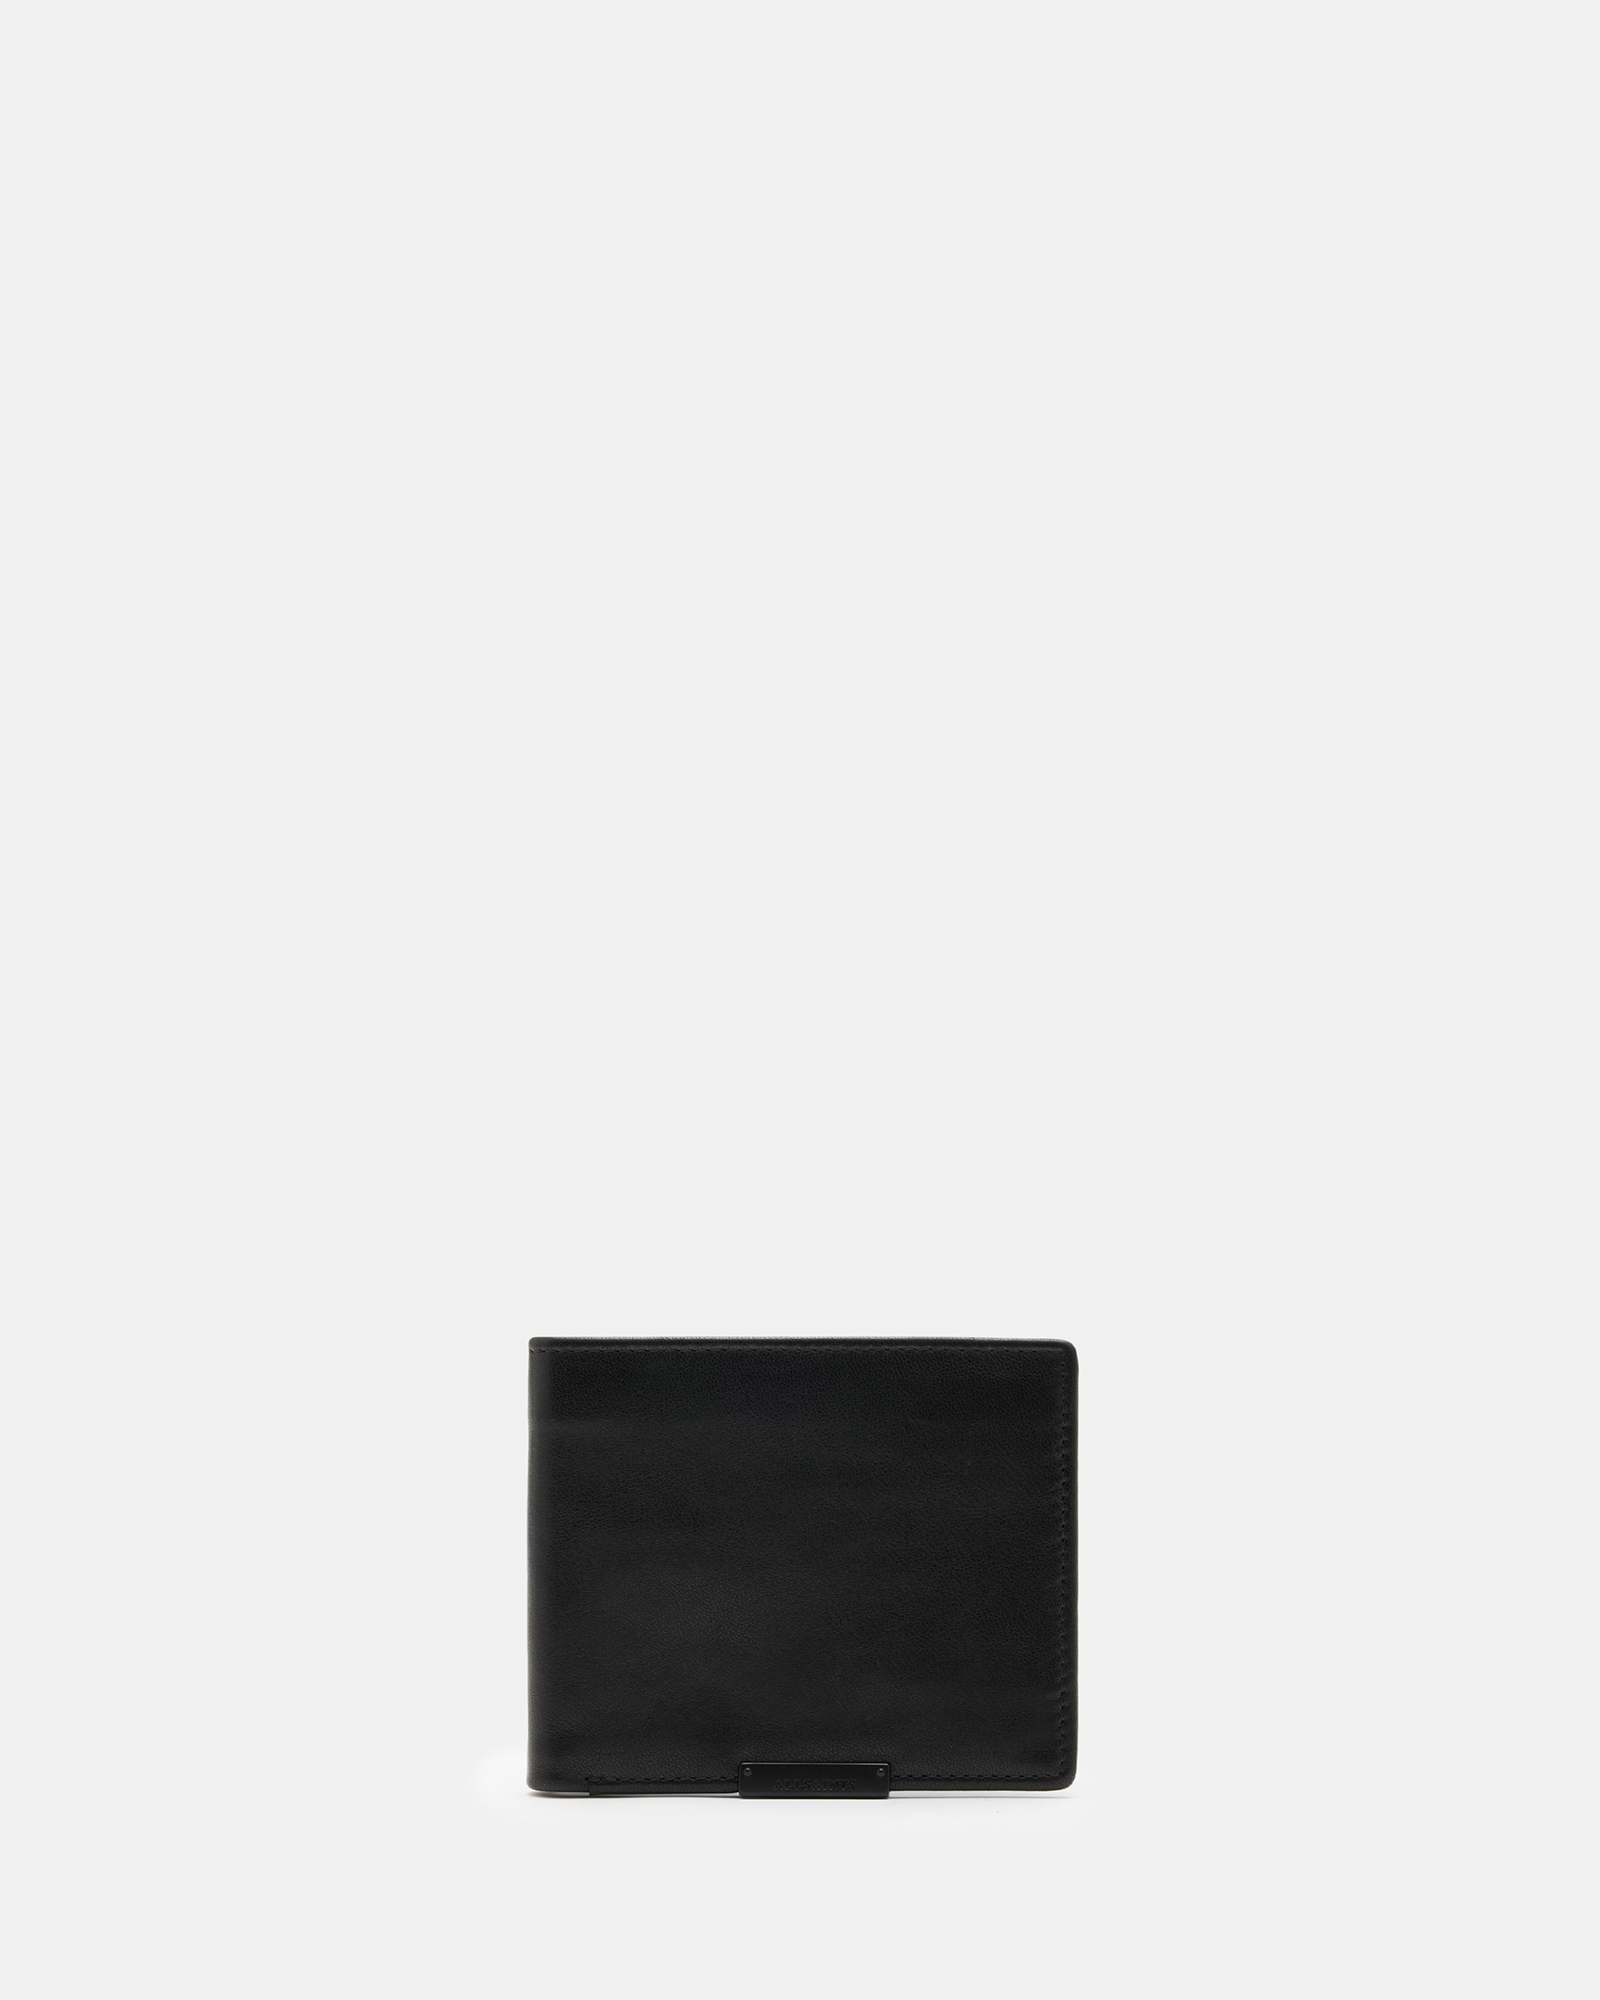 AllSaints Attain Leather Cardholder Wallet,, Black, Size: One Size